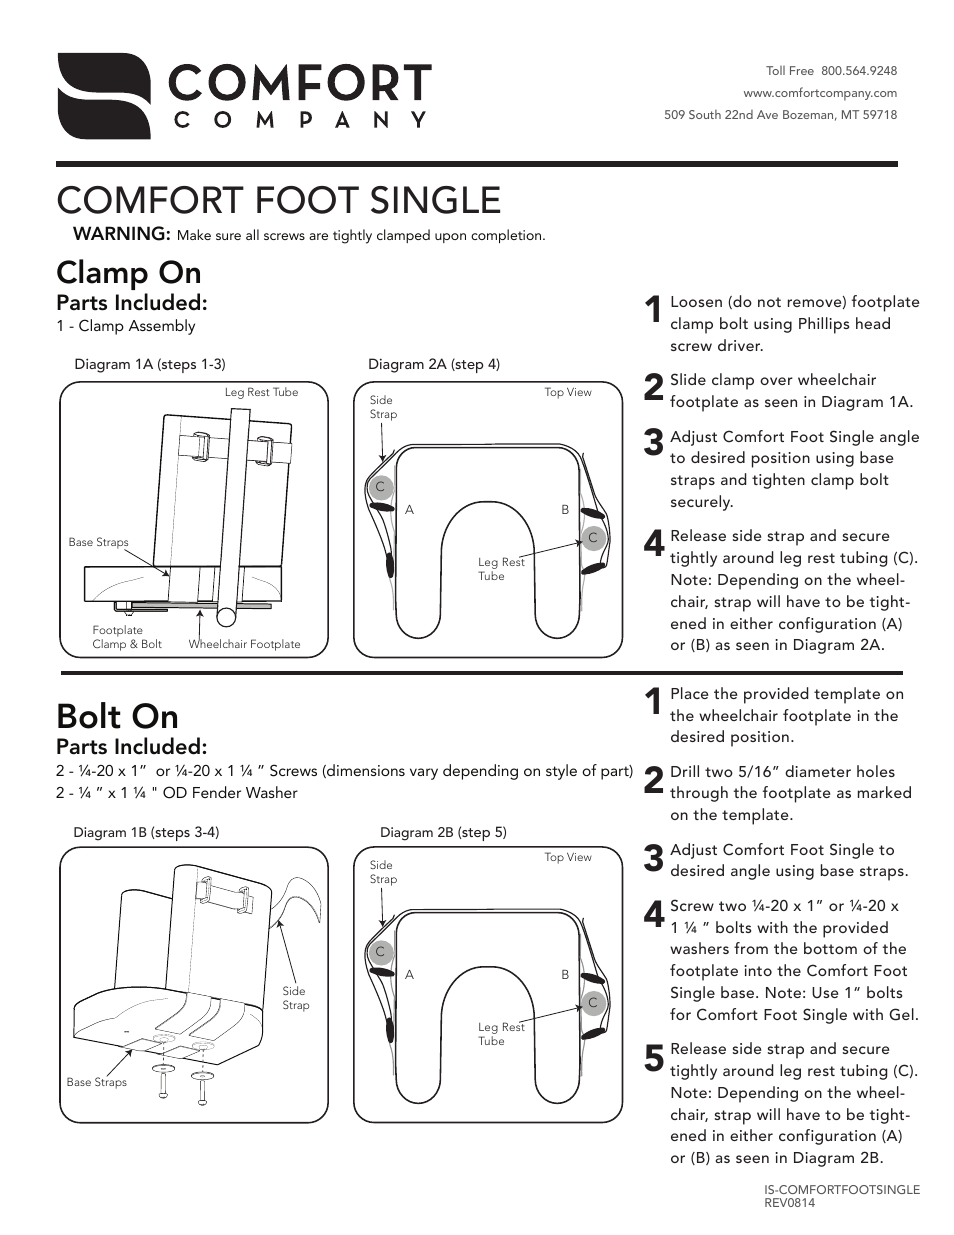 Comfort Foot Single